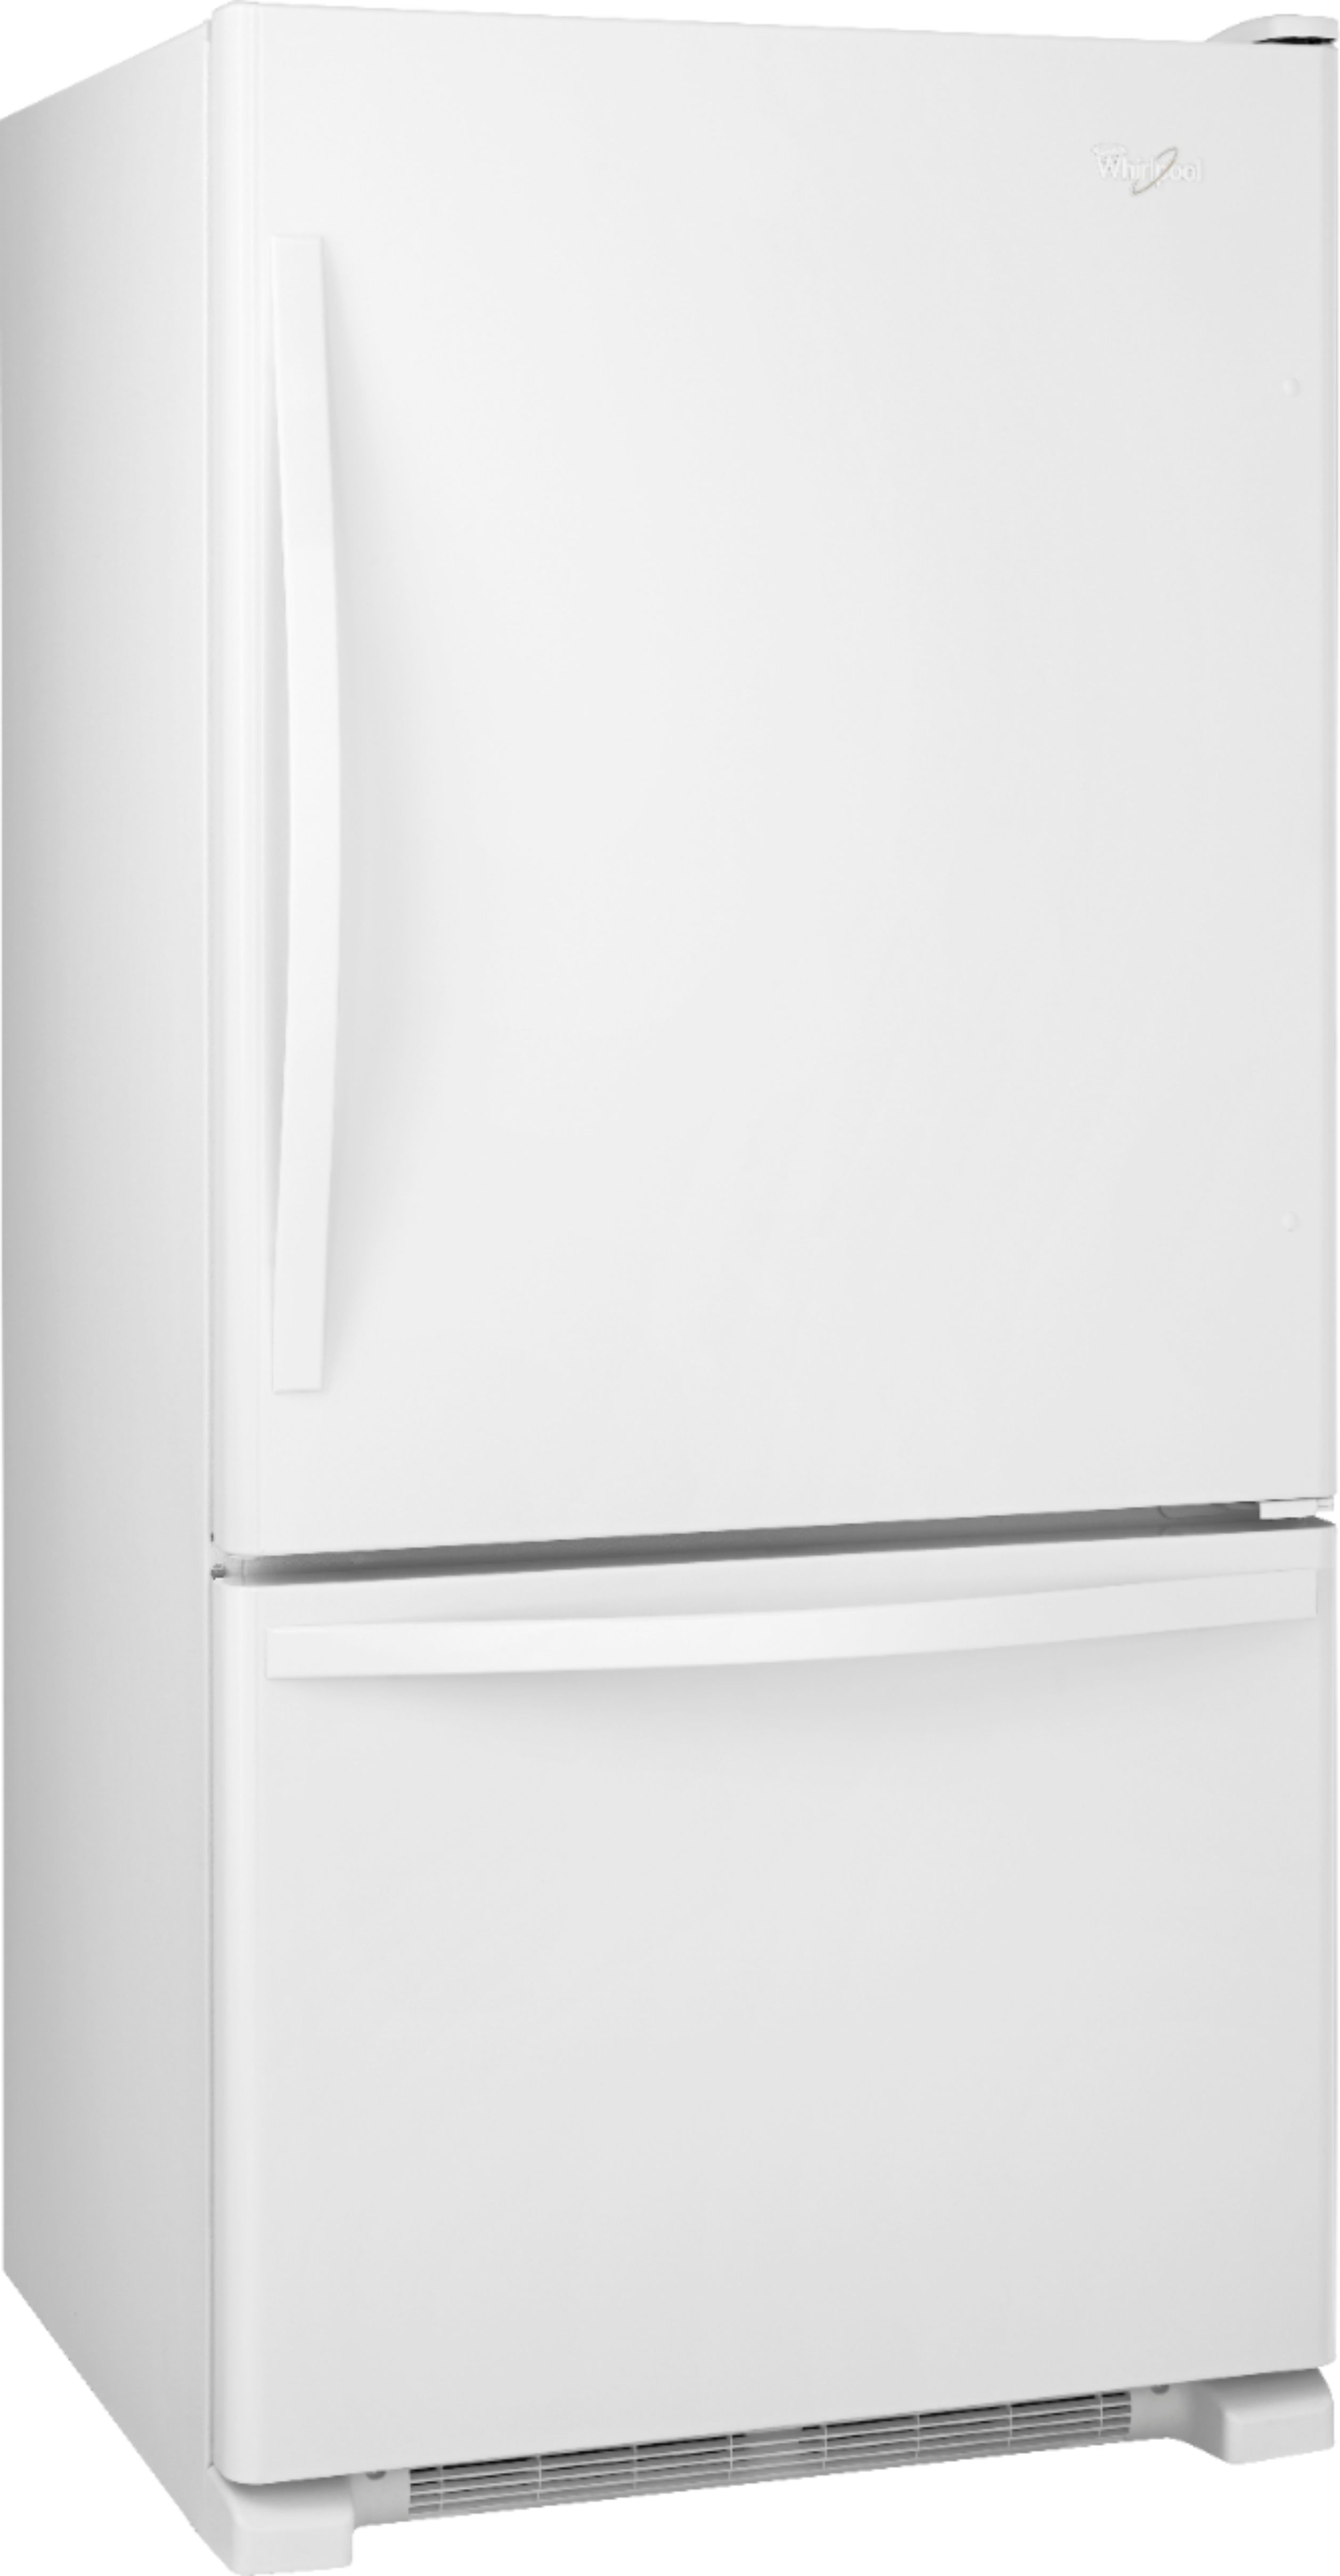 Whirlpool 21.9 Cu. Ft. Bottom-Freezer Refrigerator White on White  WRB322DMBW - Best Buy